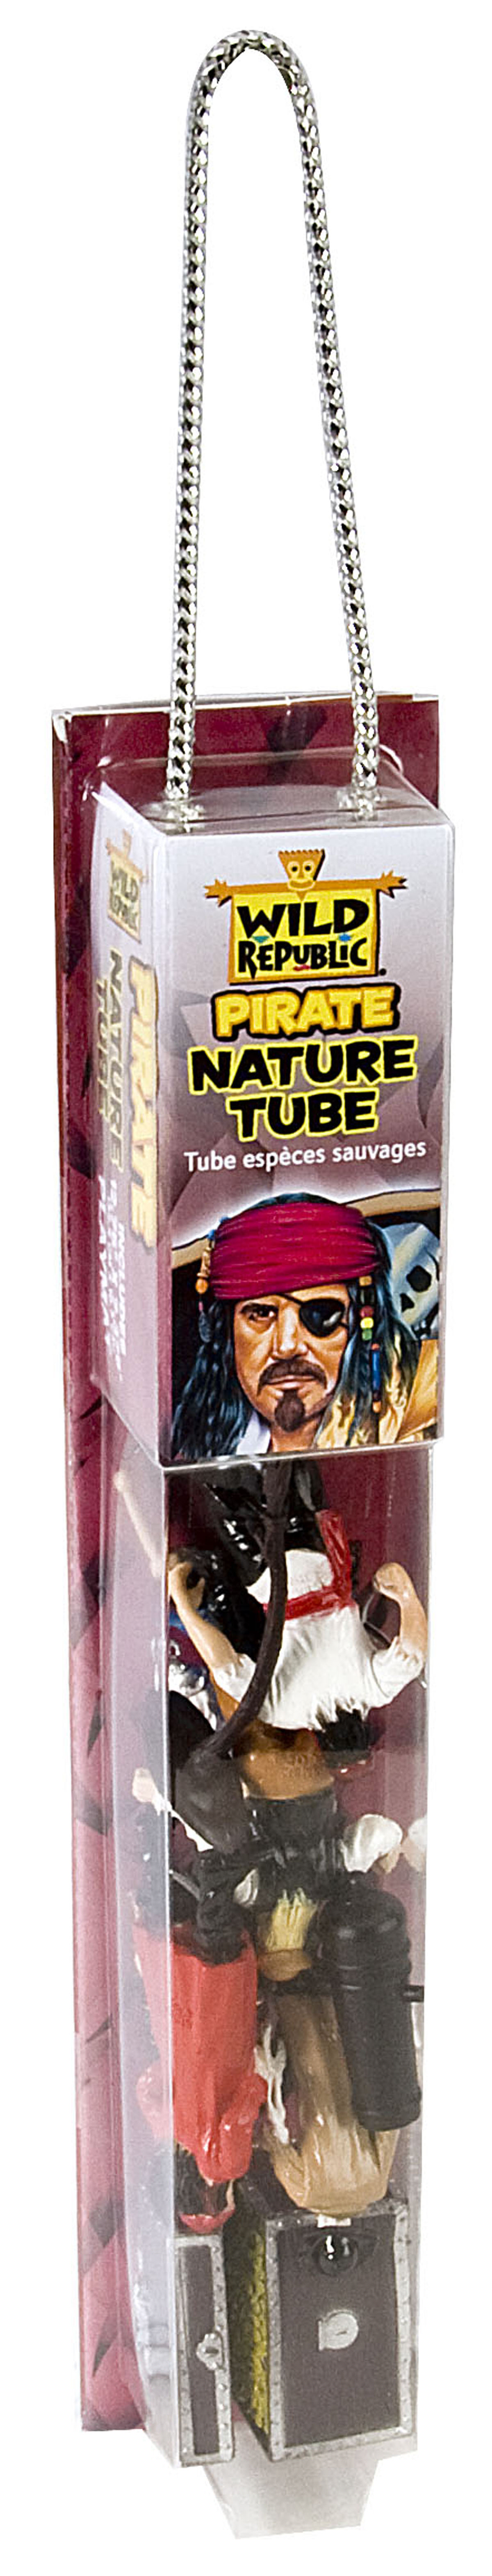 Pirate Tube